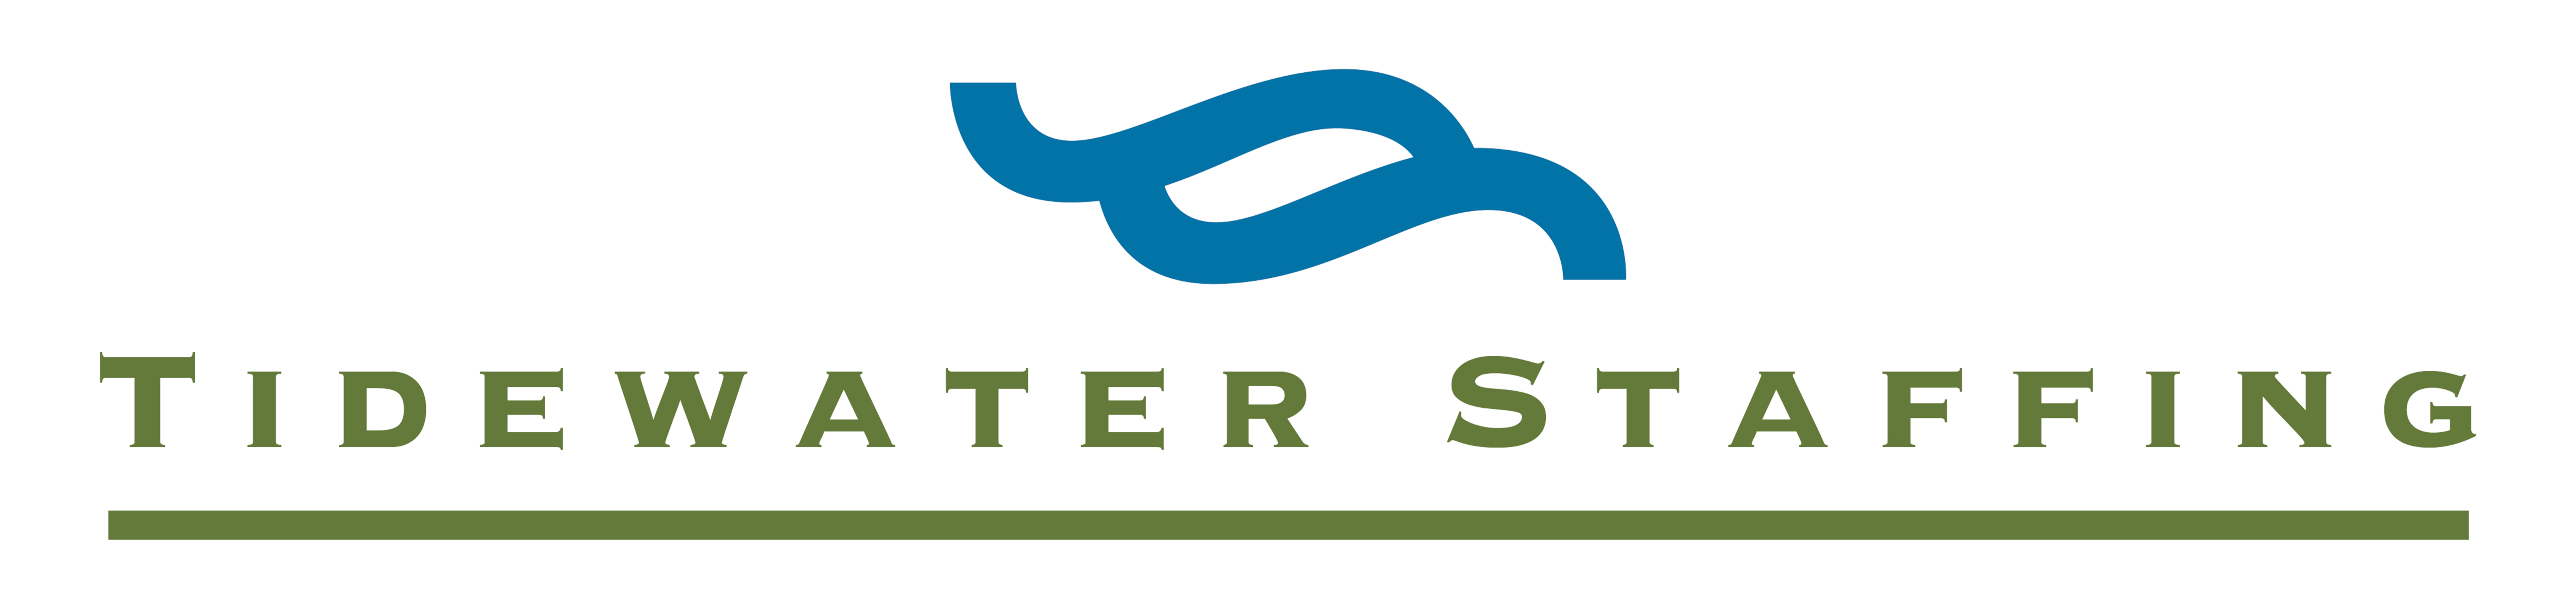 Tidewater Staffing Company Logo